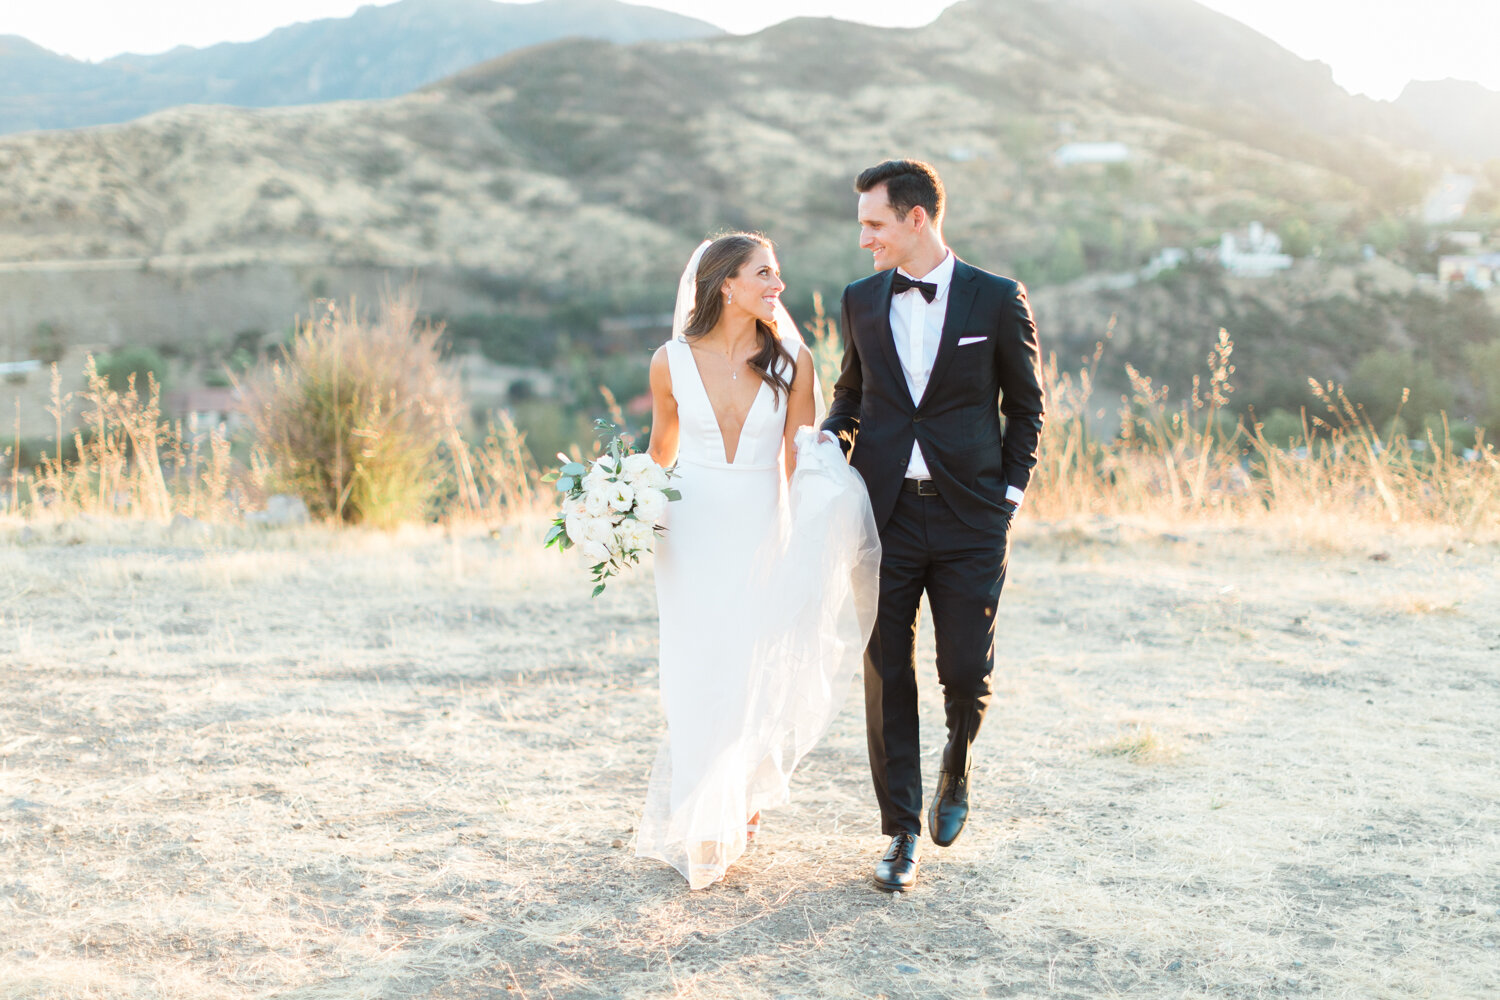 wisteria-photography.com | Wisteria Photography | Triunfo Creek Vineyards | Weddings Engagement | Southern California Photographer-32.jpg